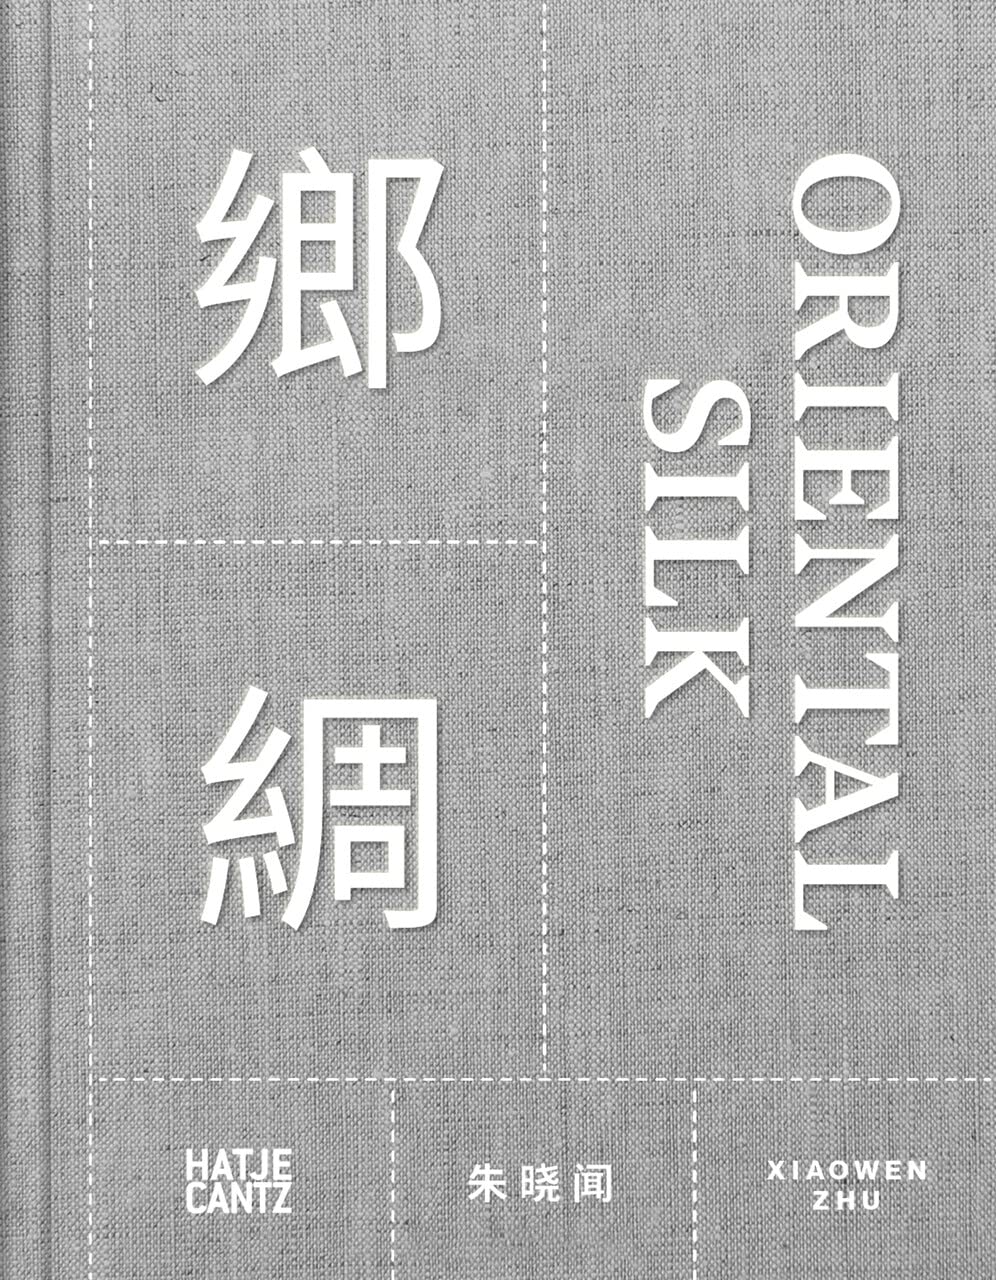 Xiaowen Zhu: Oriental Silk